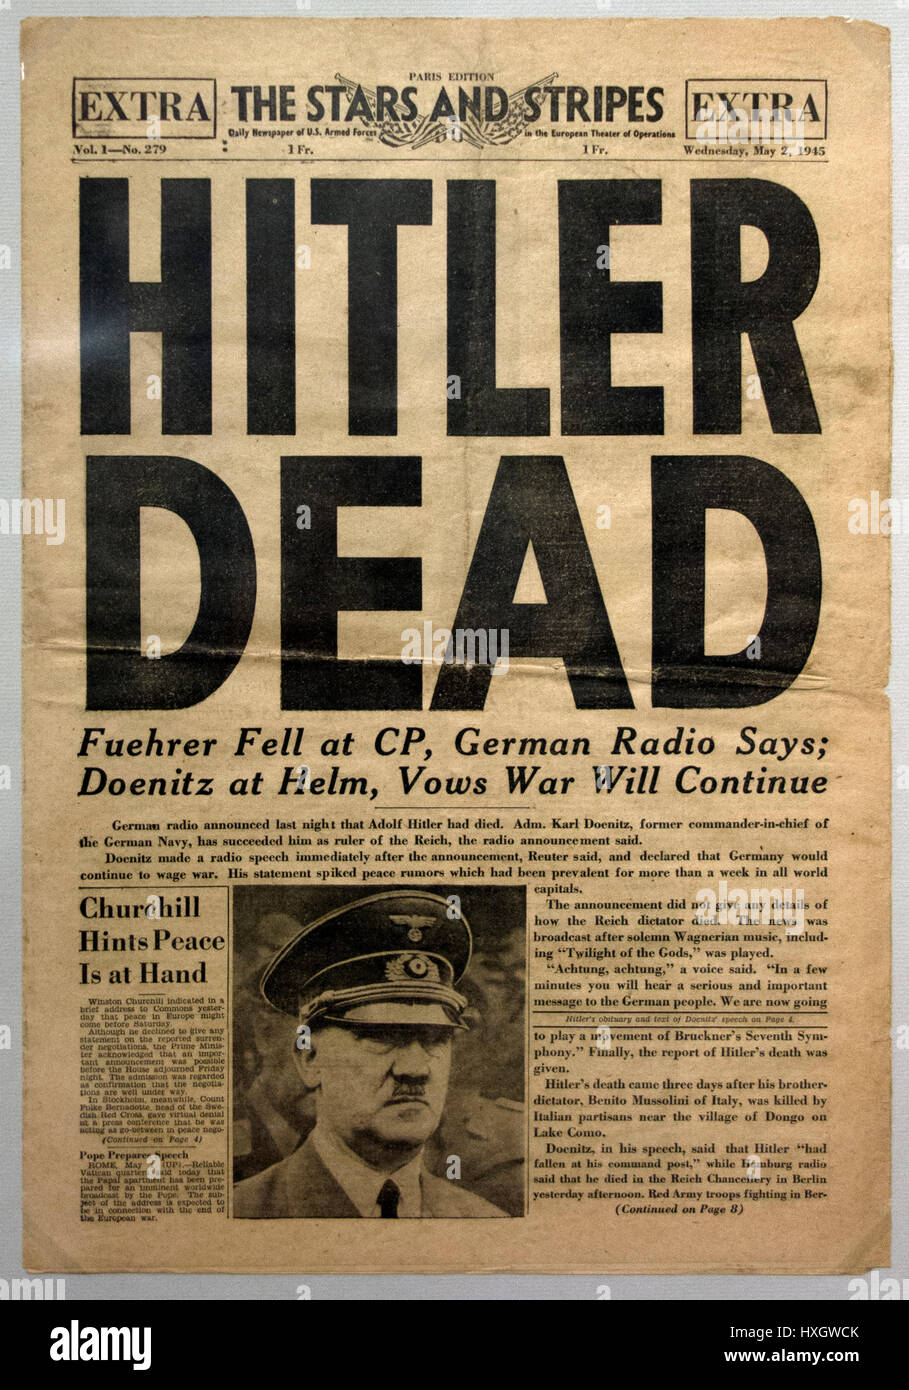 How hitler died